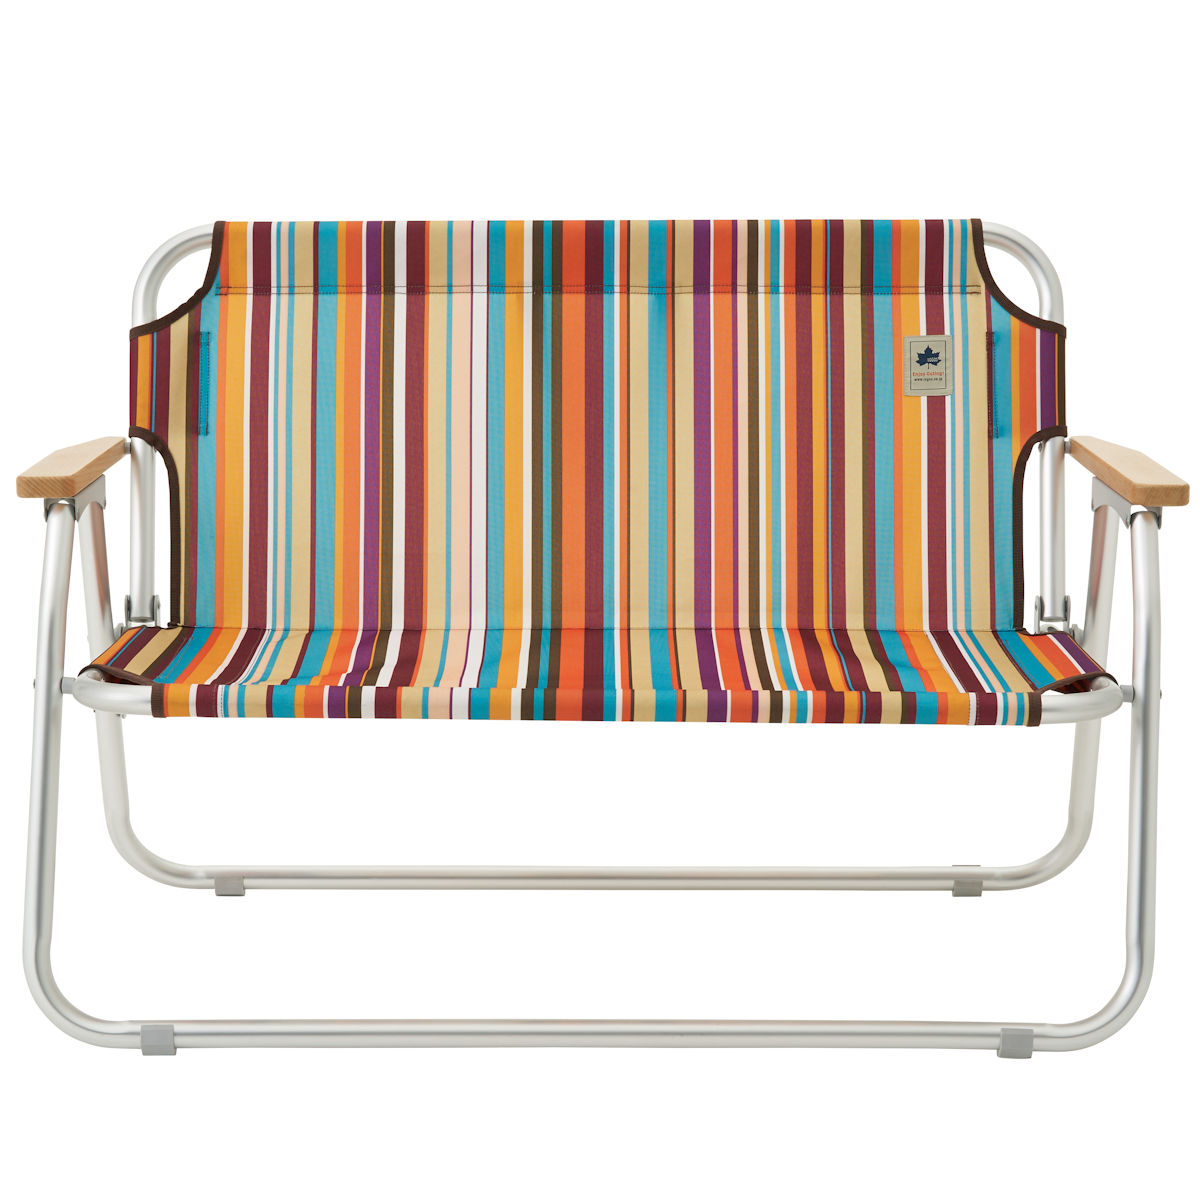 neos チェアfor2-ST（オレンジストライプ）|ギア|家具|椅子・ベンチ ...